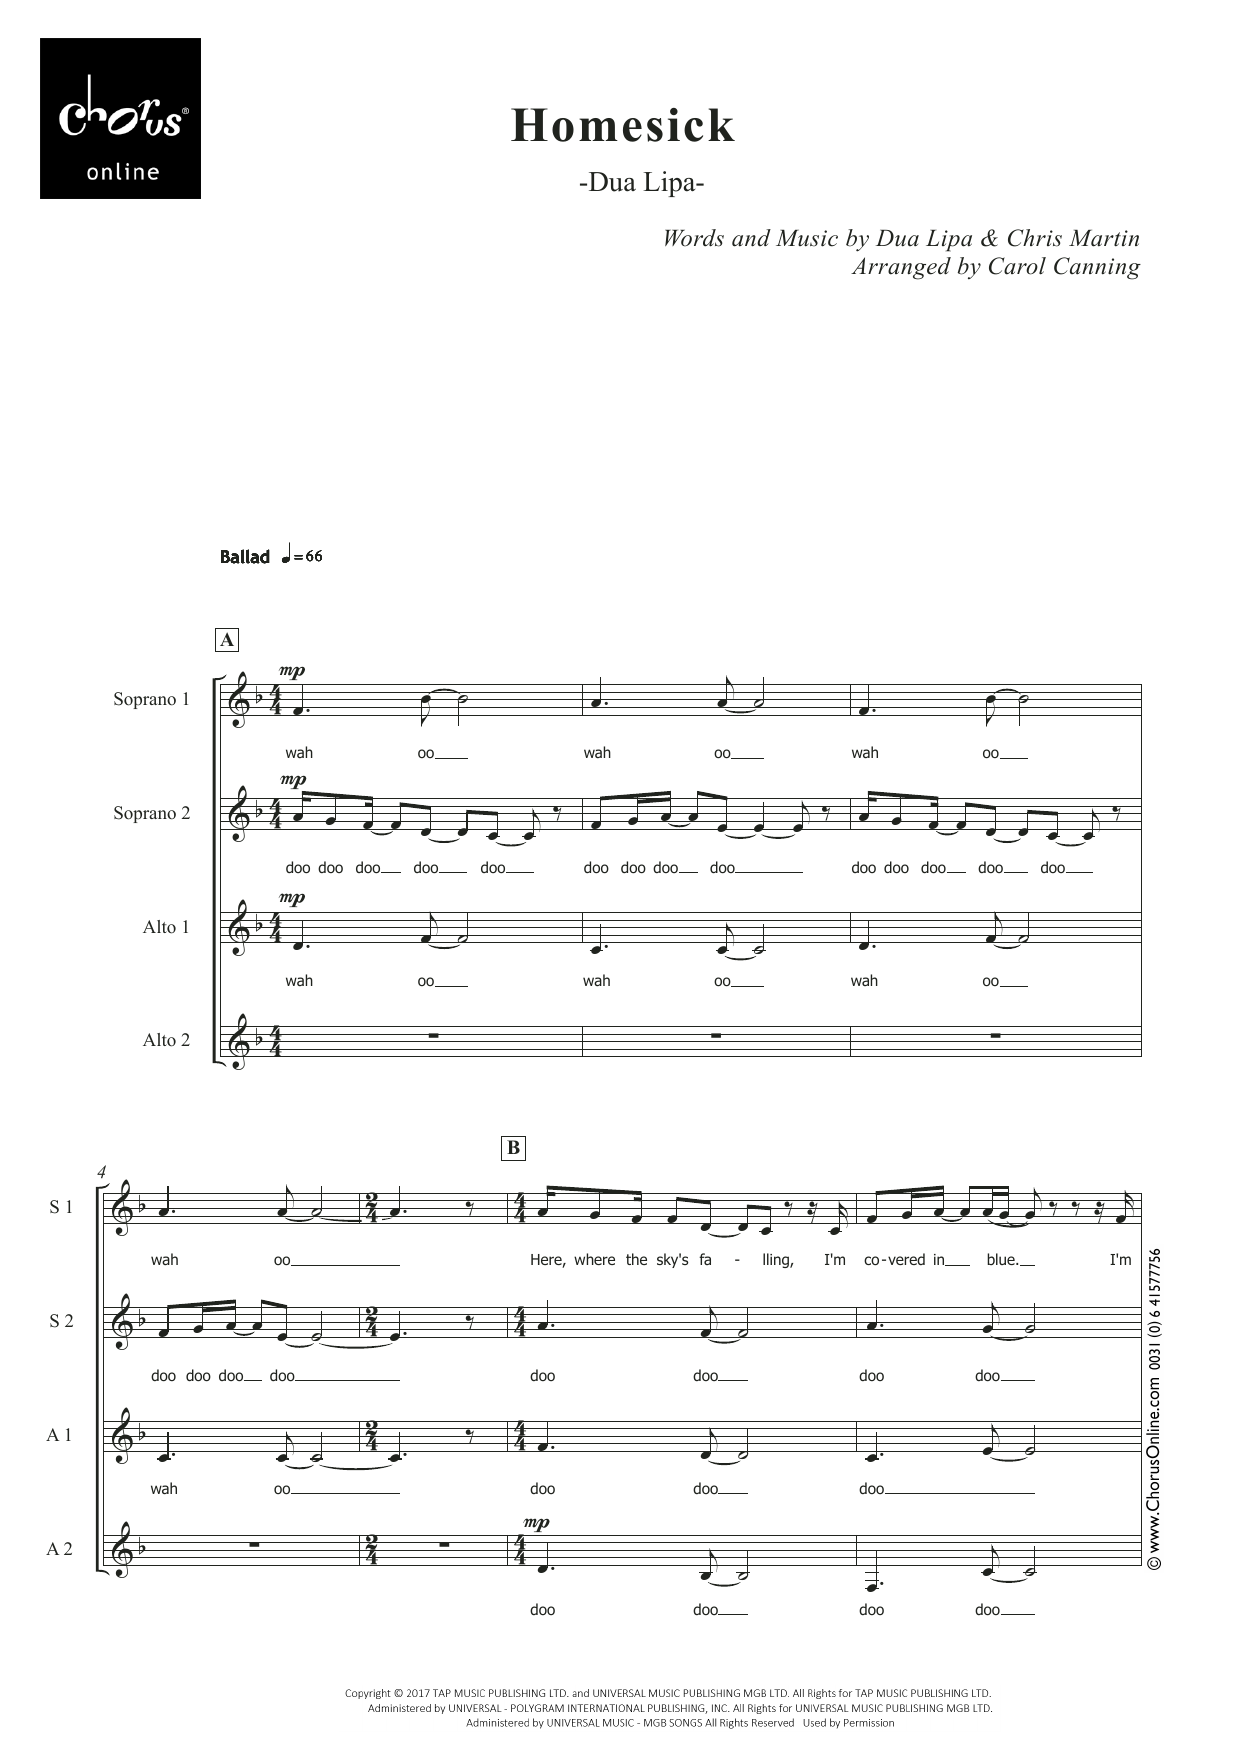 Dua Lipa Homesick (arr. Carol Canning) sheet music notes printable PDF score